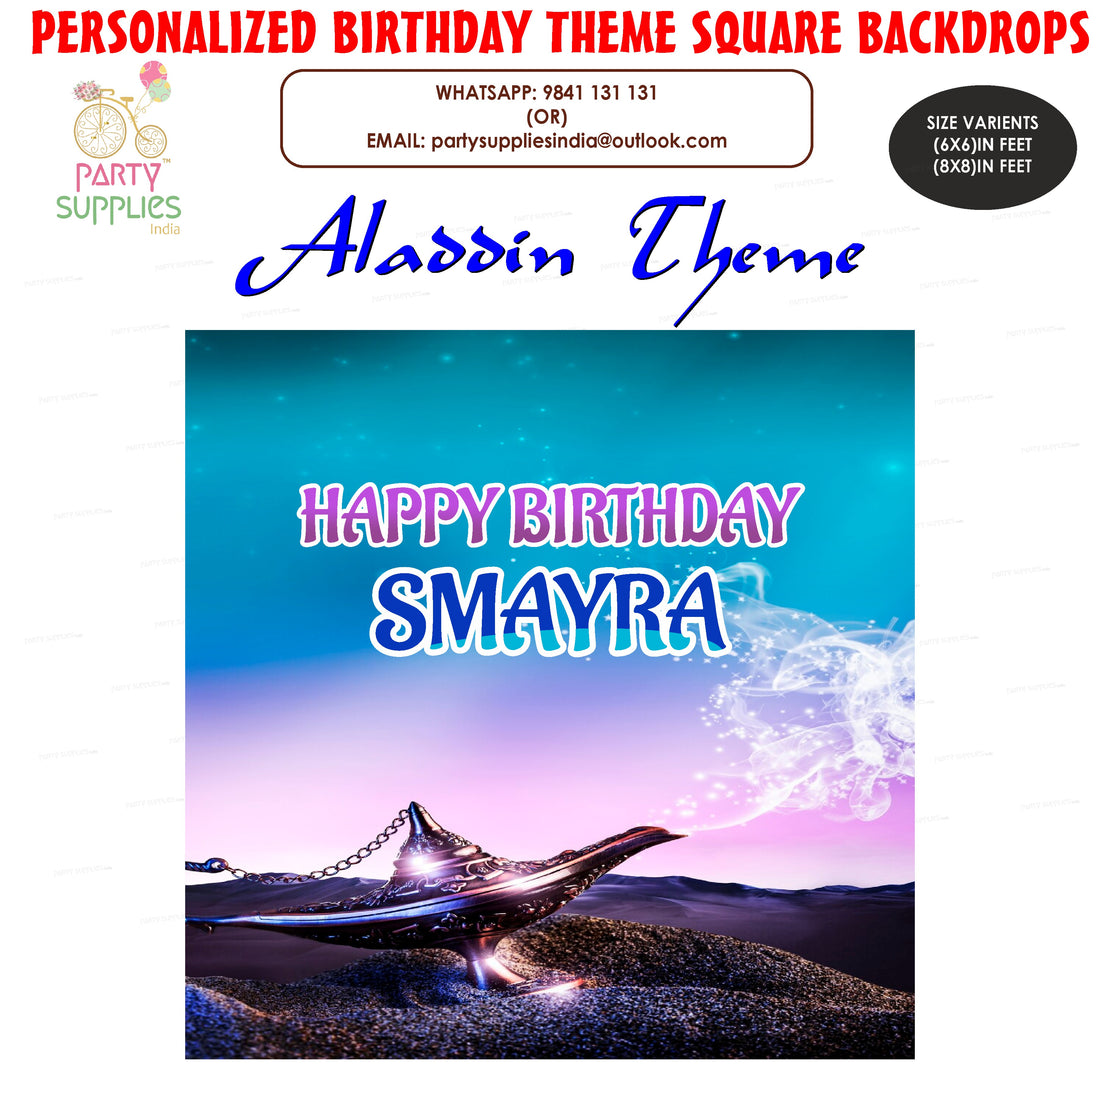 PSI Aladdin Theme Square Backdrop